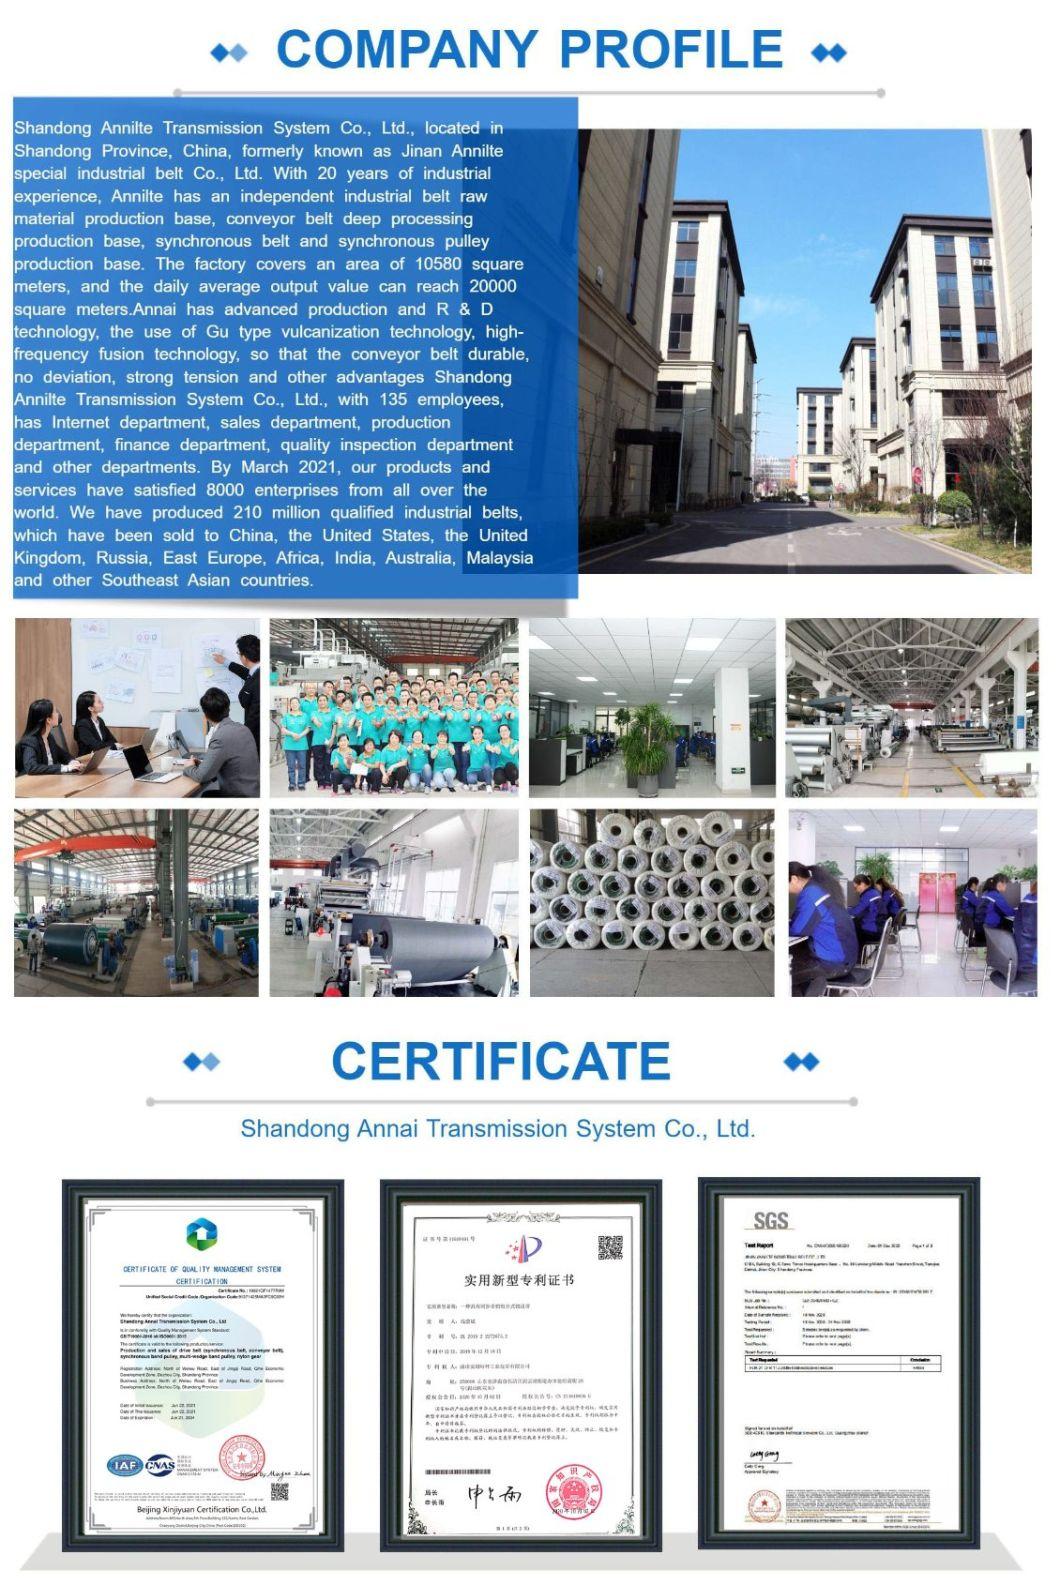 Annilte Factory Customized Processing of White PU Translucent Transparent Conveyor Belt